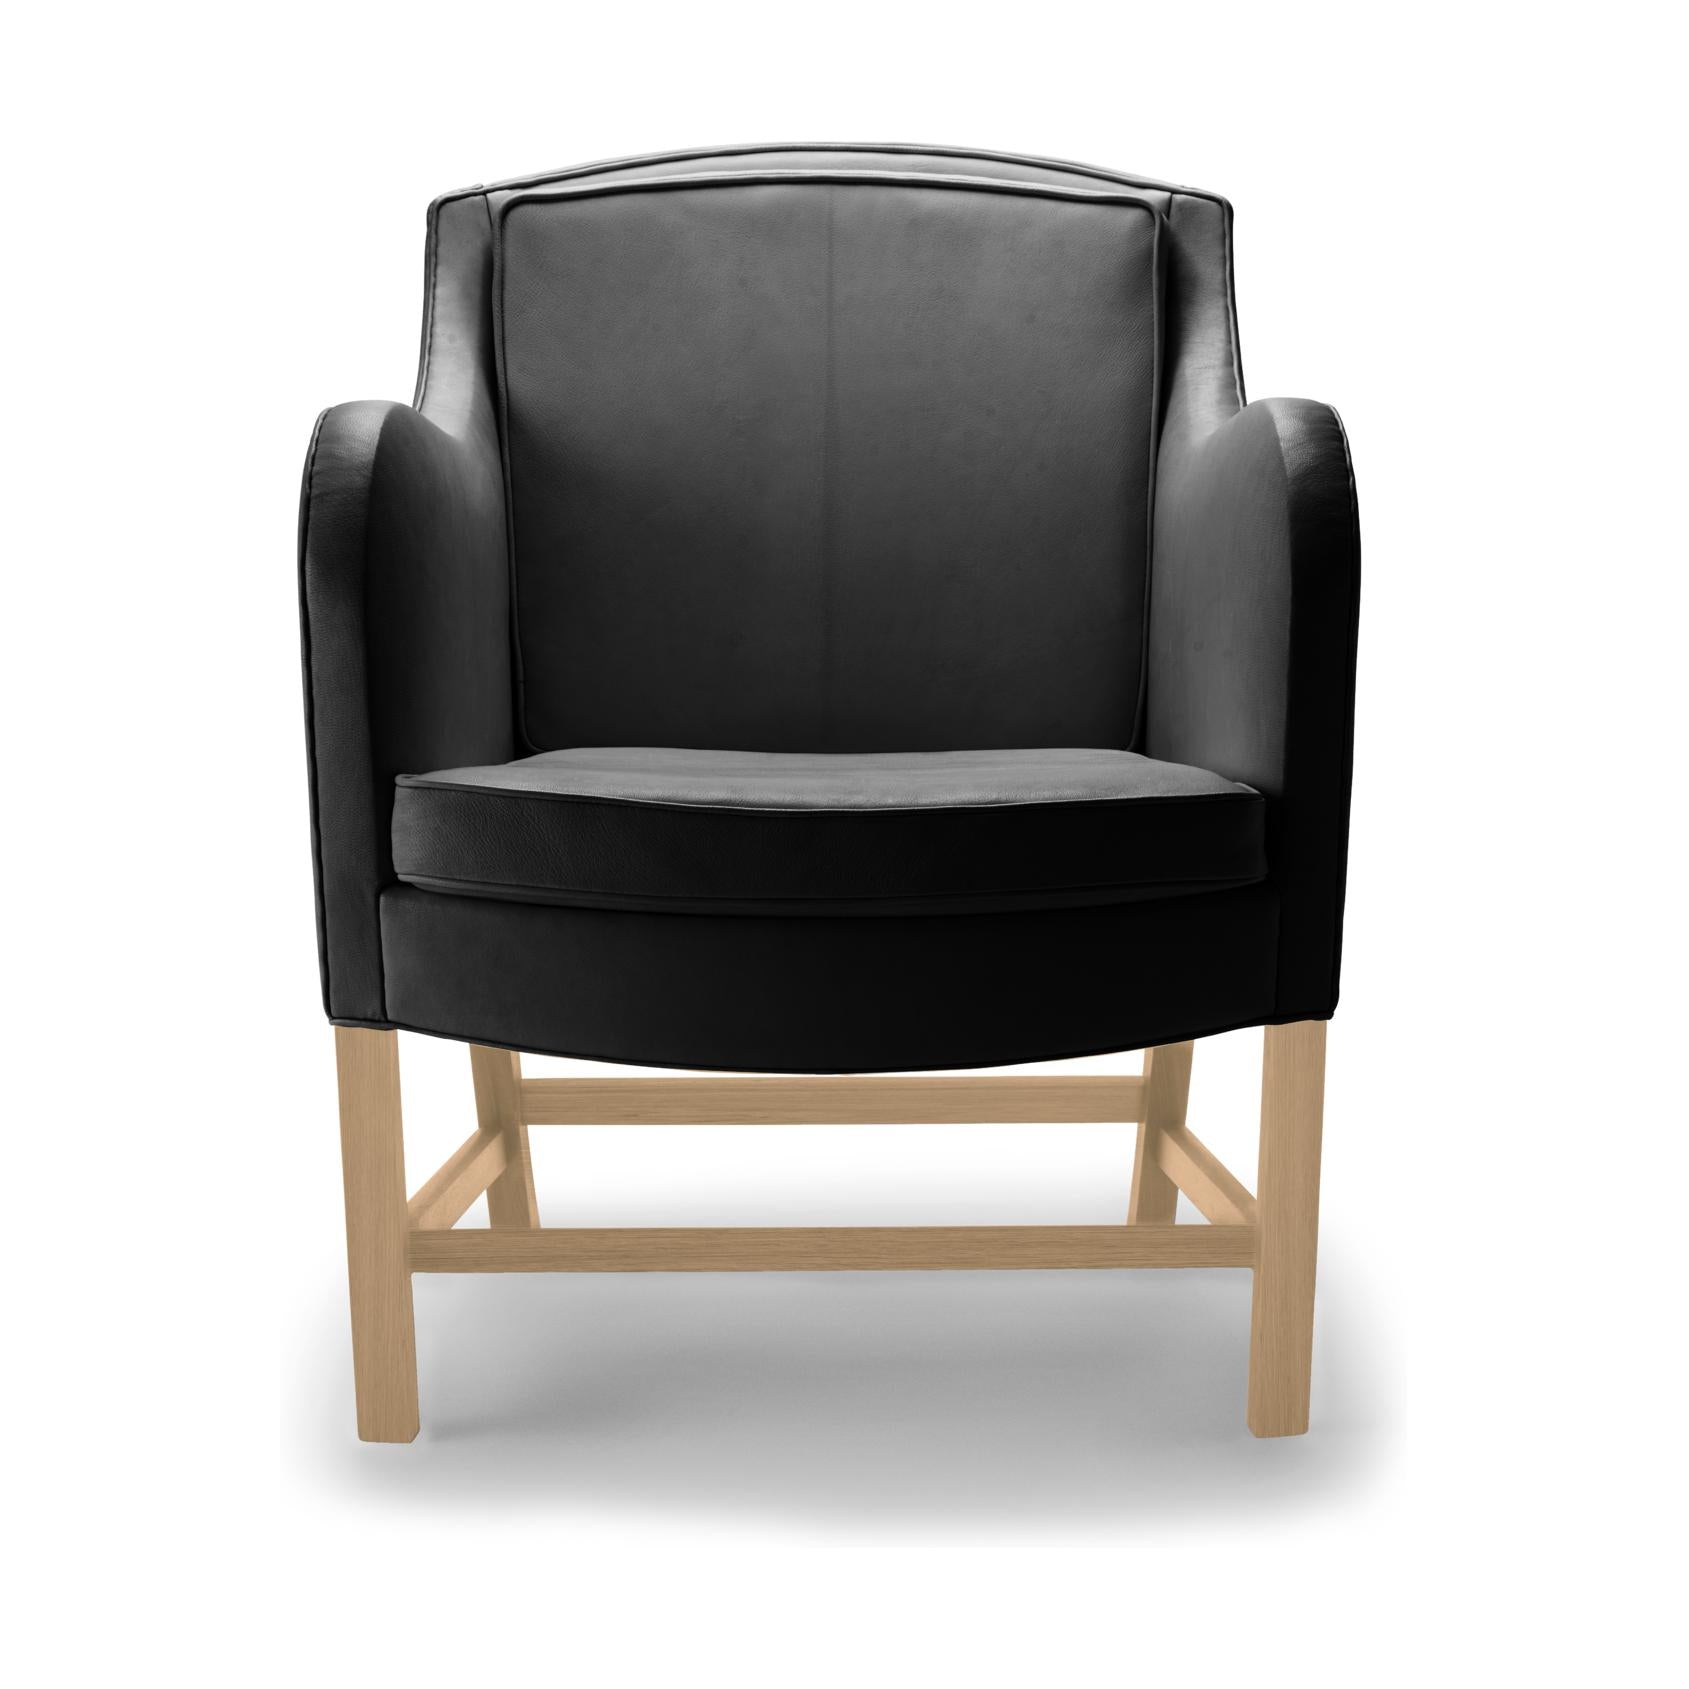 Carl Hansen KK43960 Mix Lounge Chair, oljat ek/svart läder